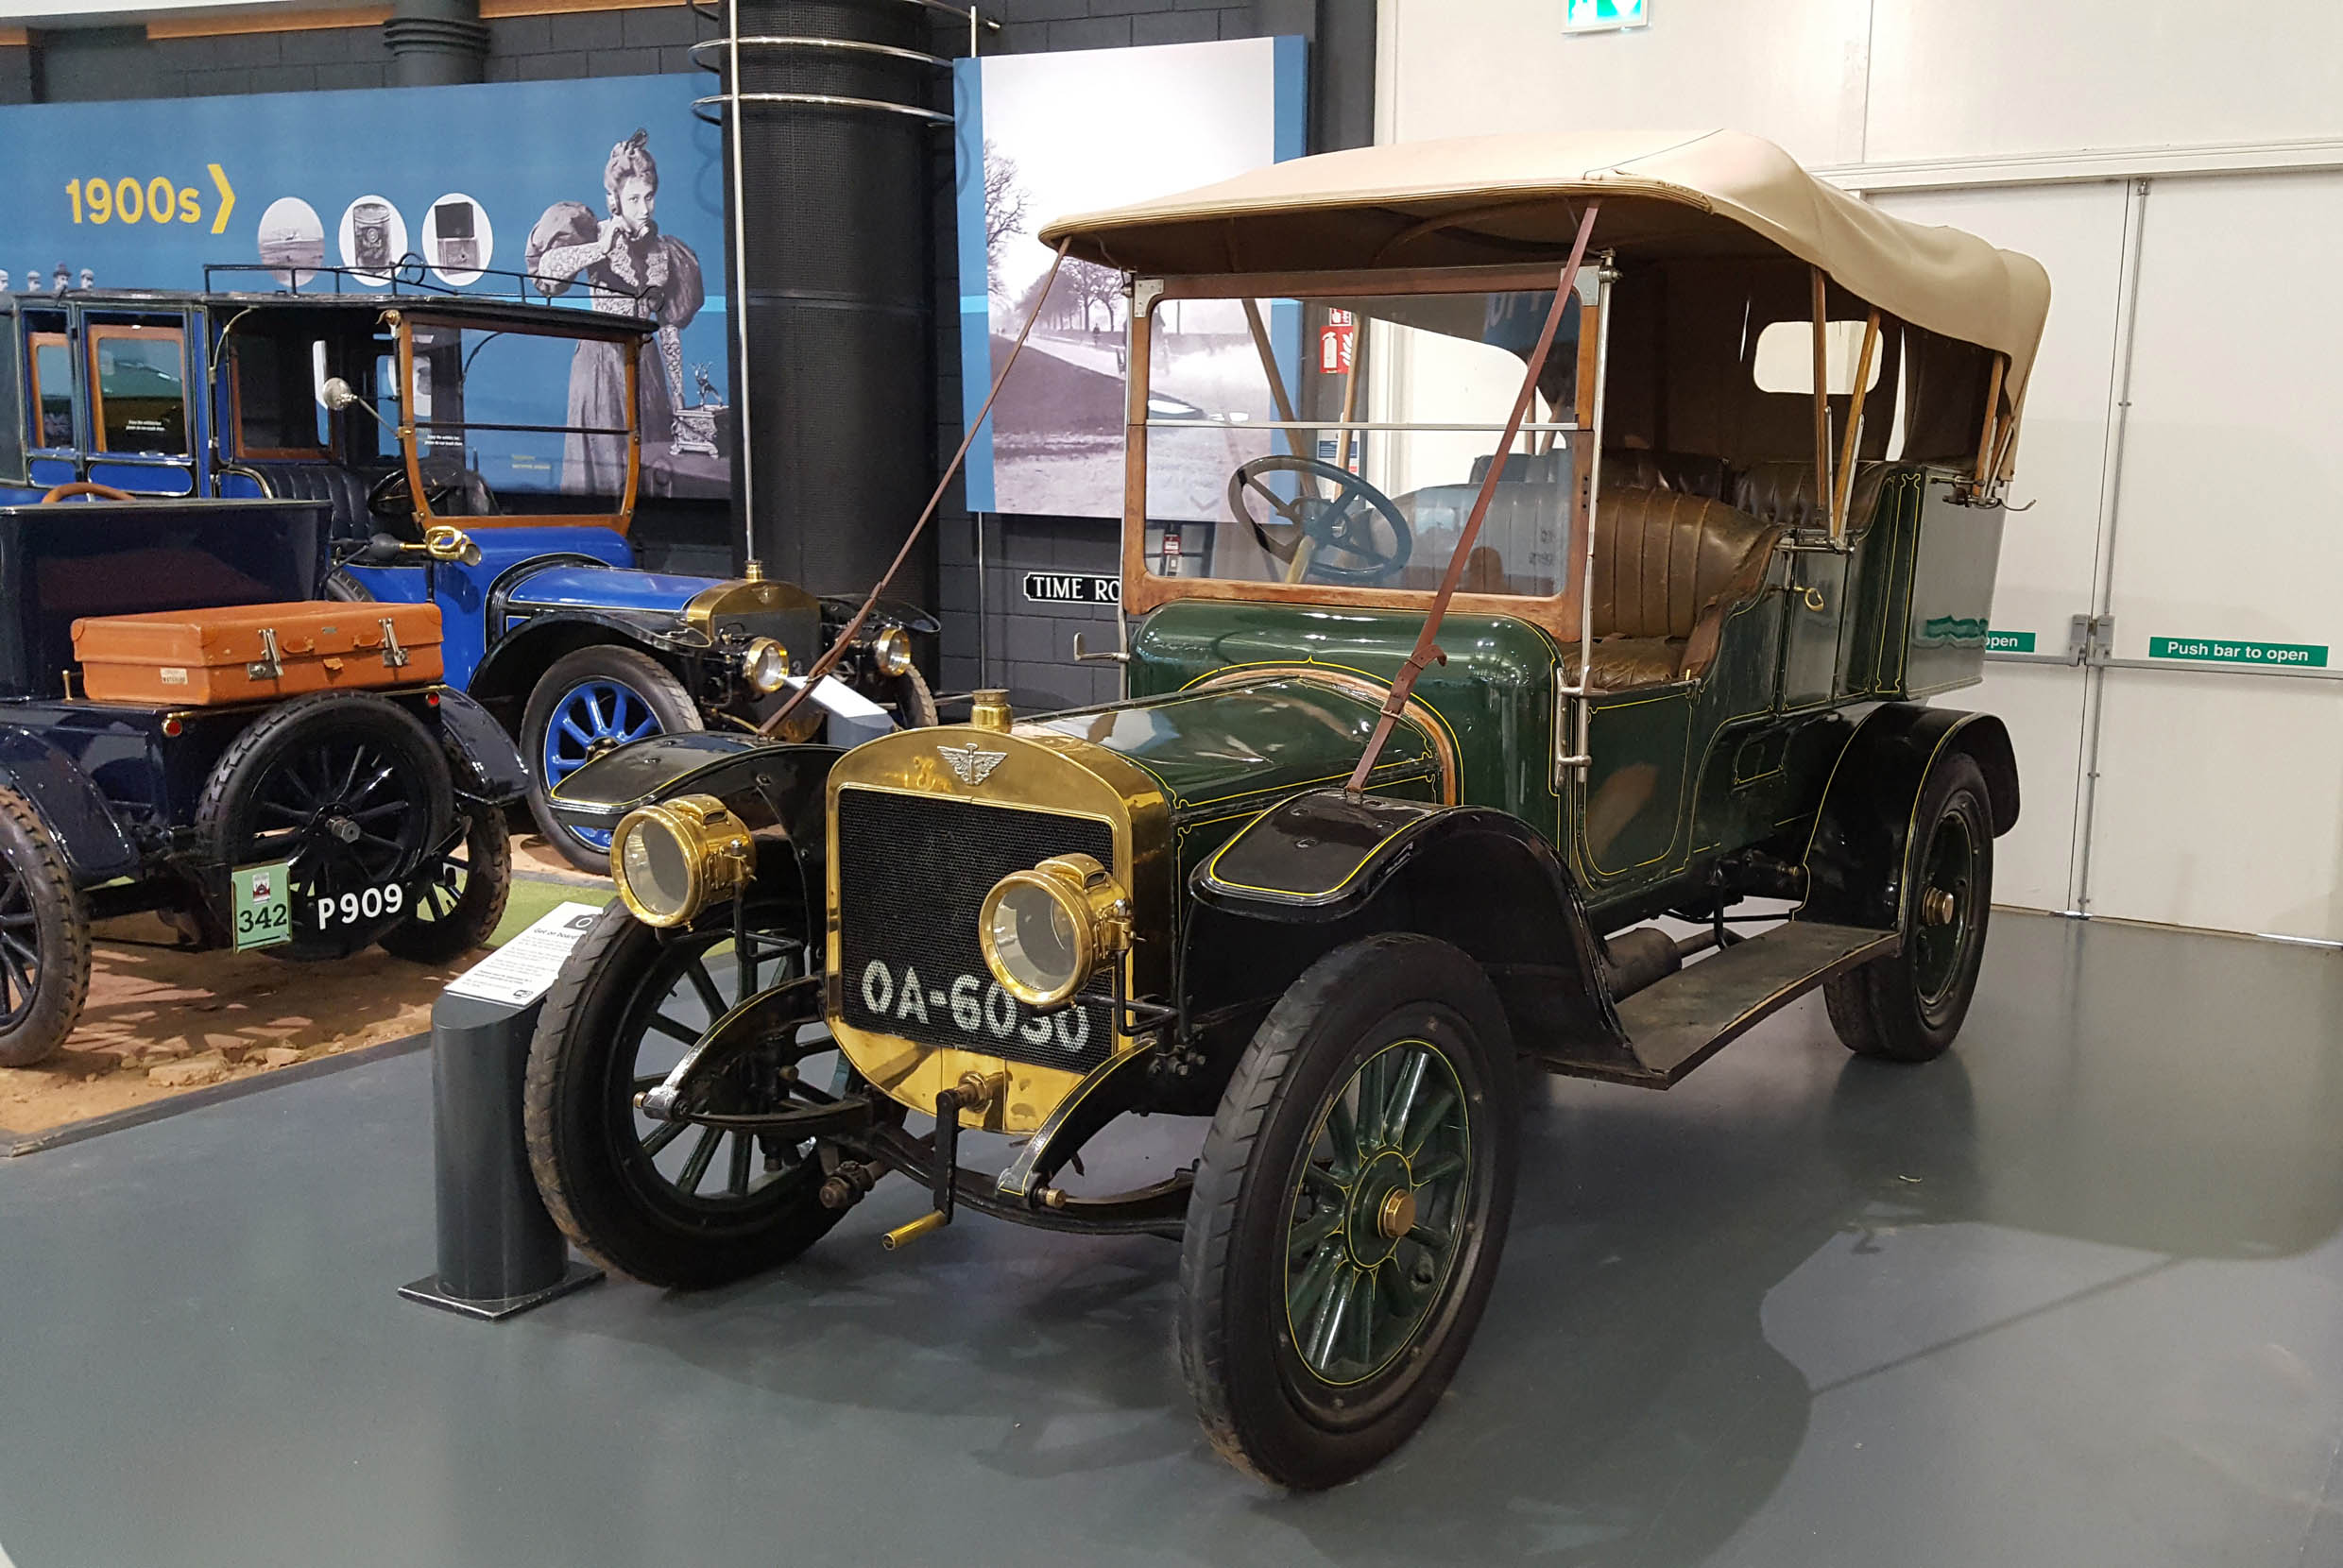 Z wizytą w British Motor Museum by LONG STORY SHORT